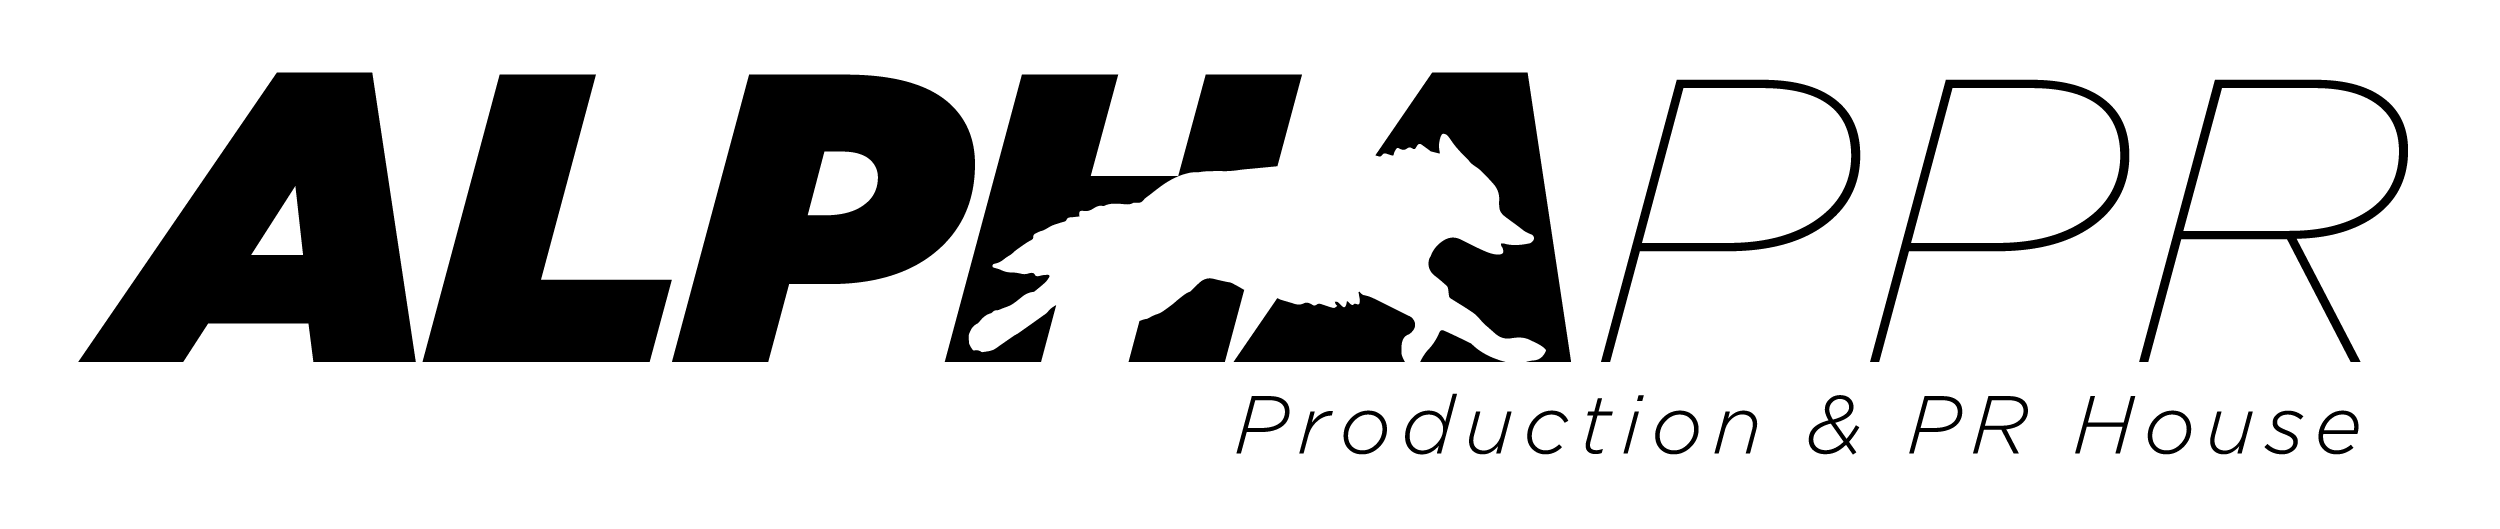 alphappr-logo